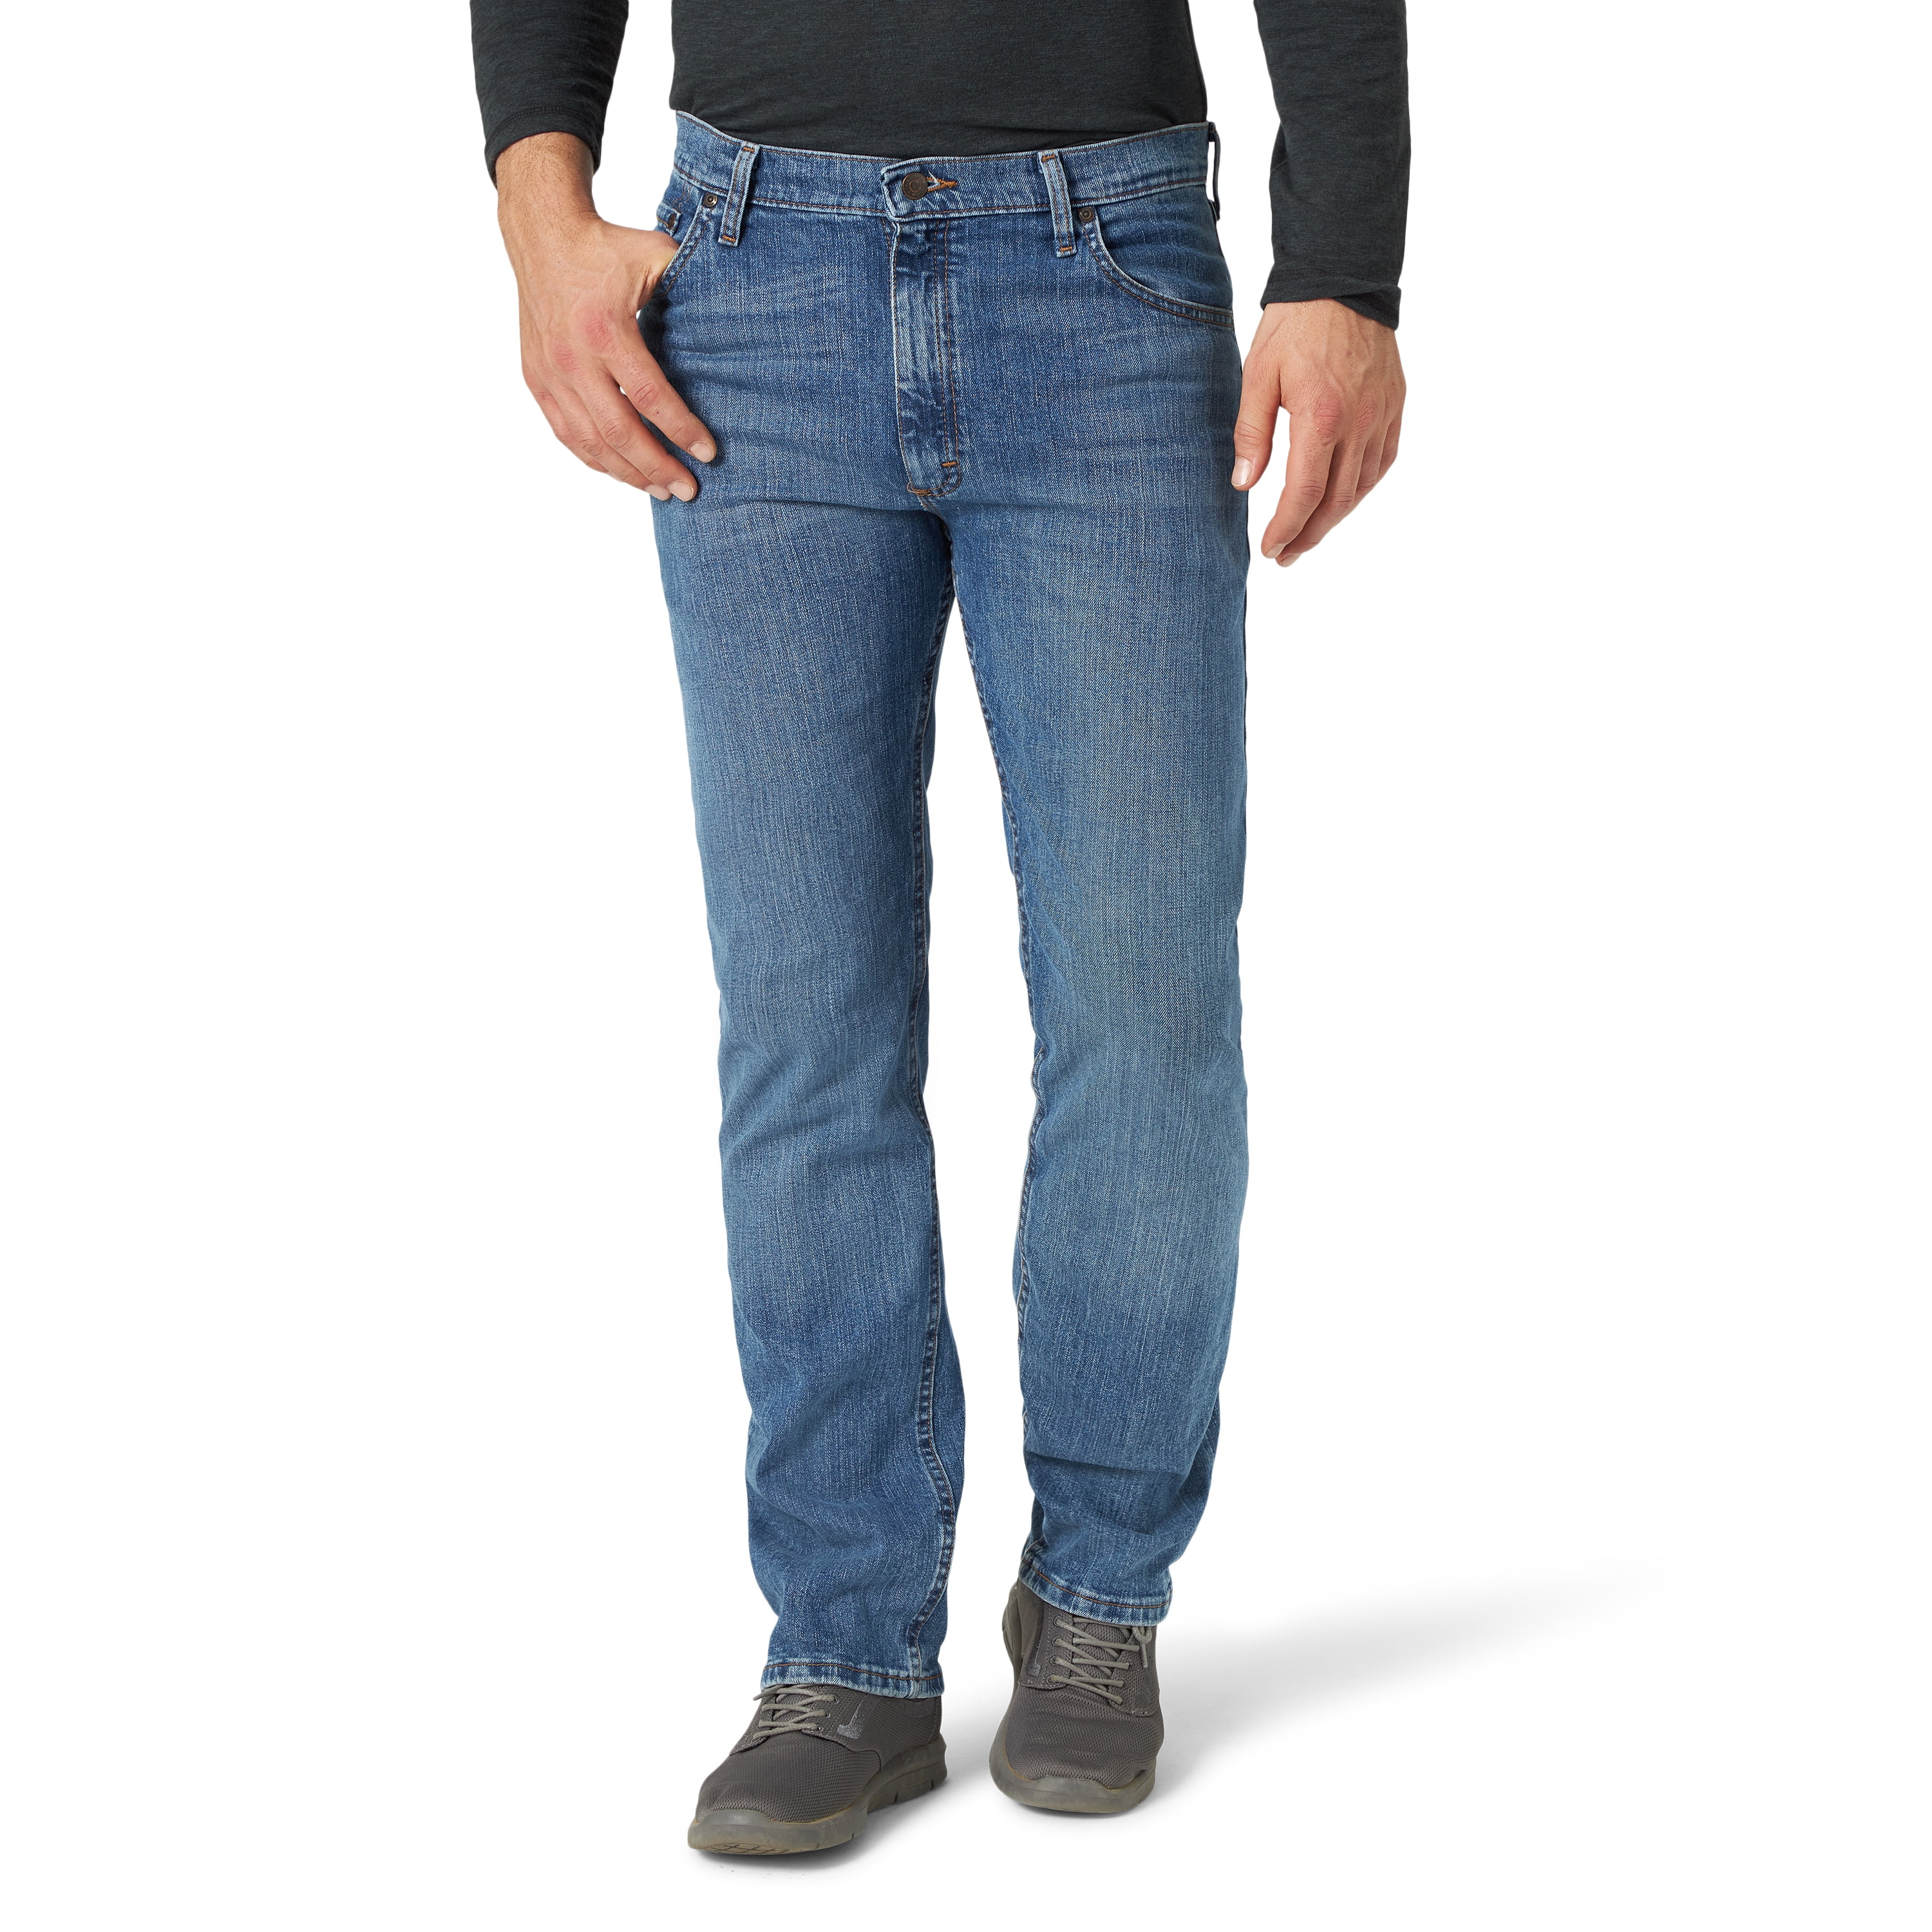 Wrangler Men's 5 Star Regular Fit Jeans with Flex 